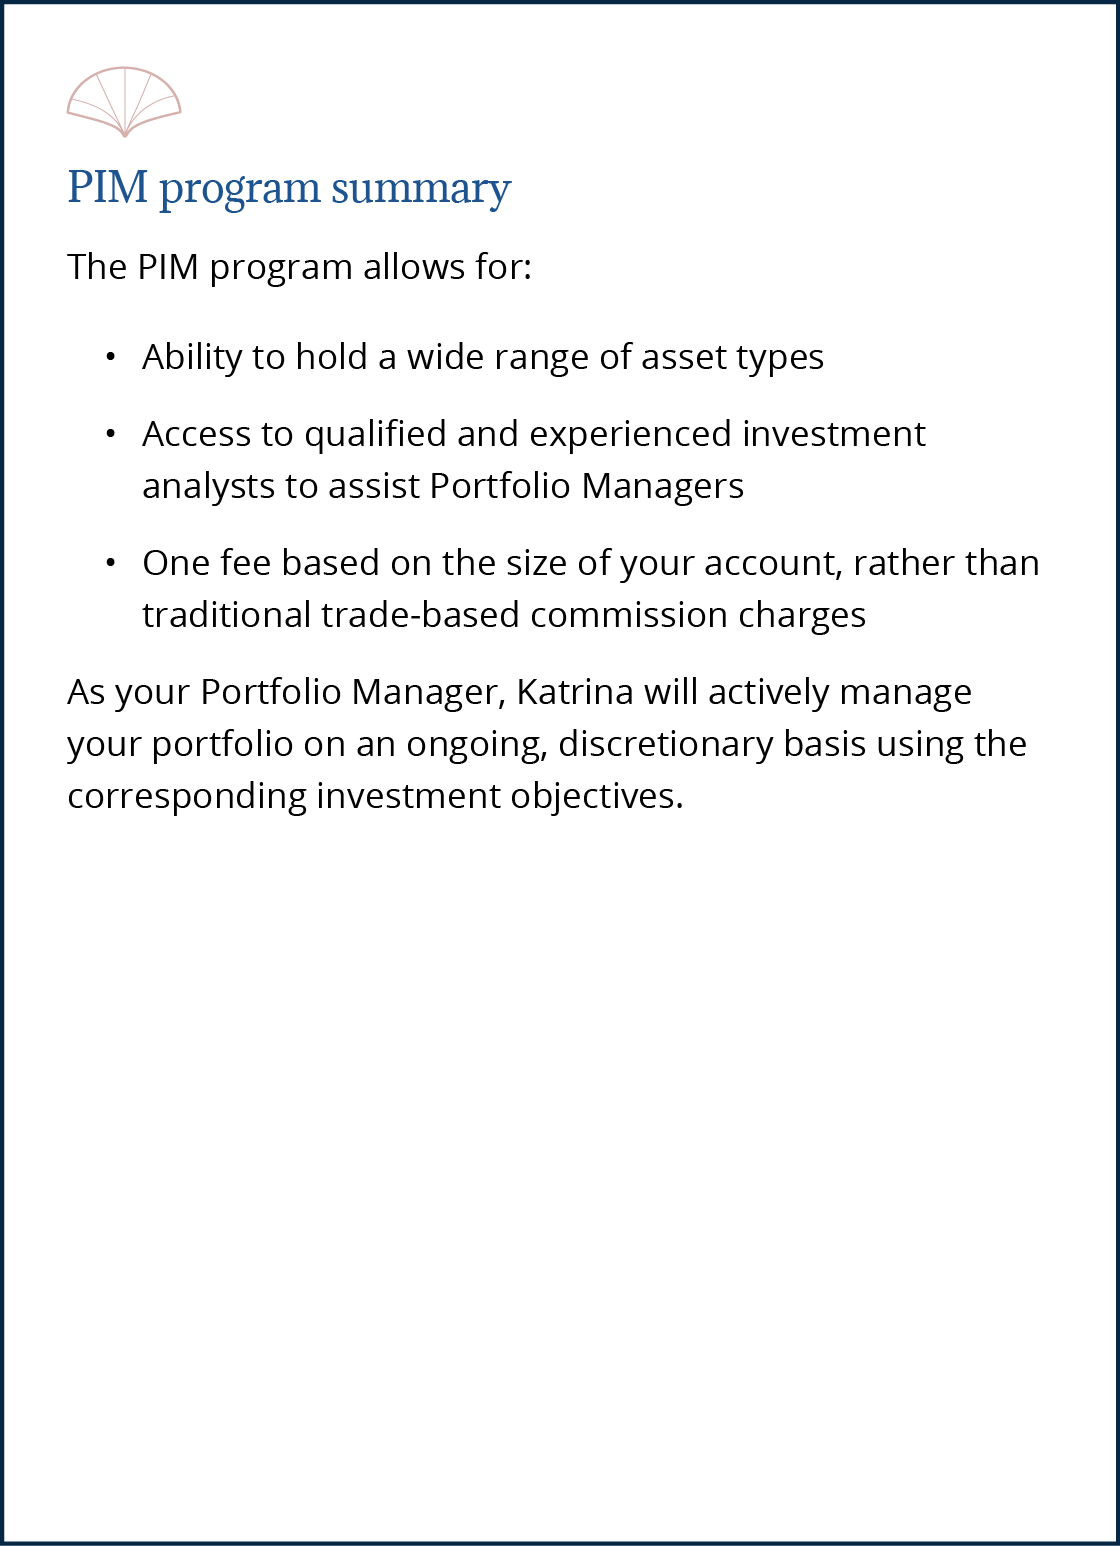 PIM program summary.png